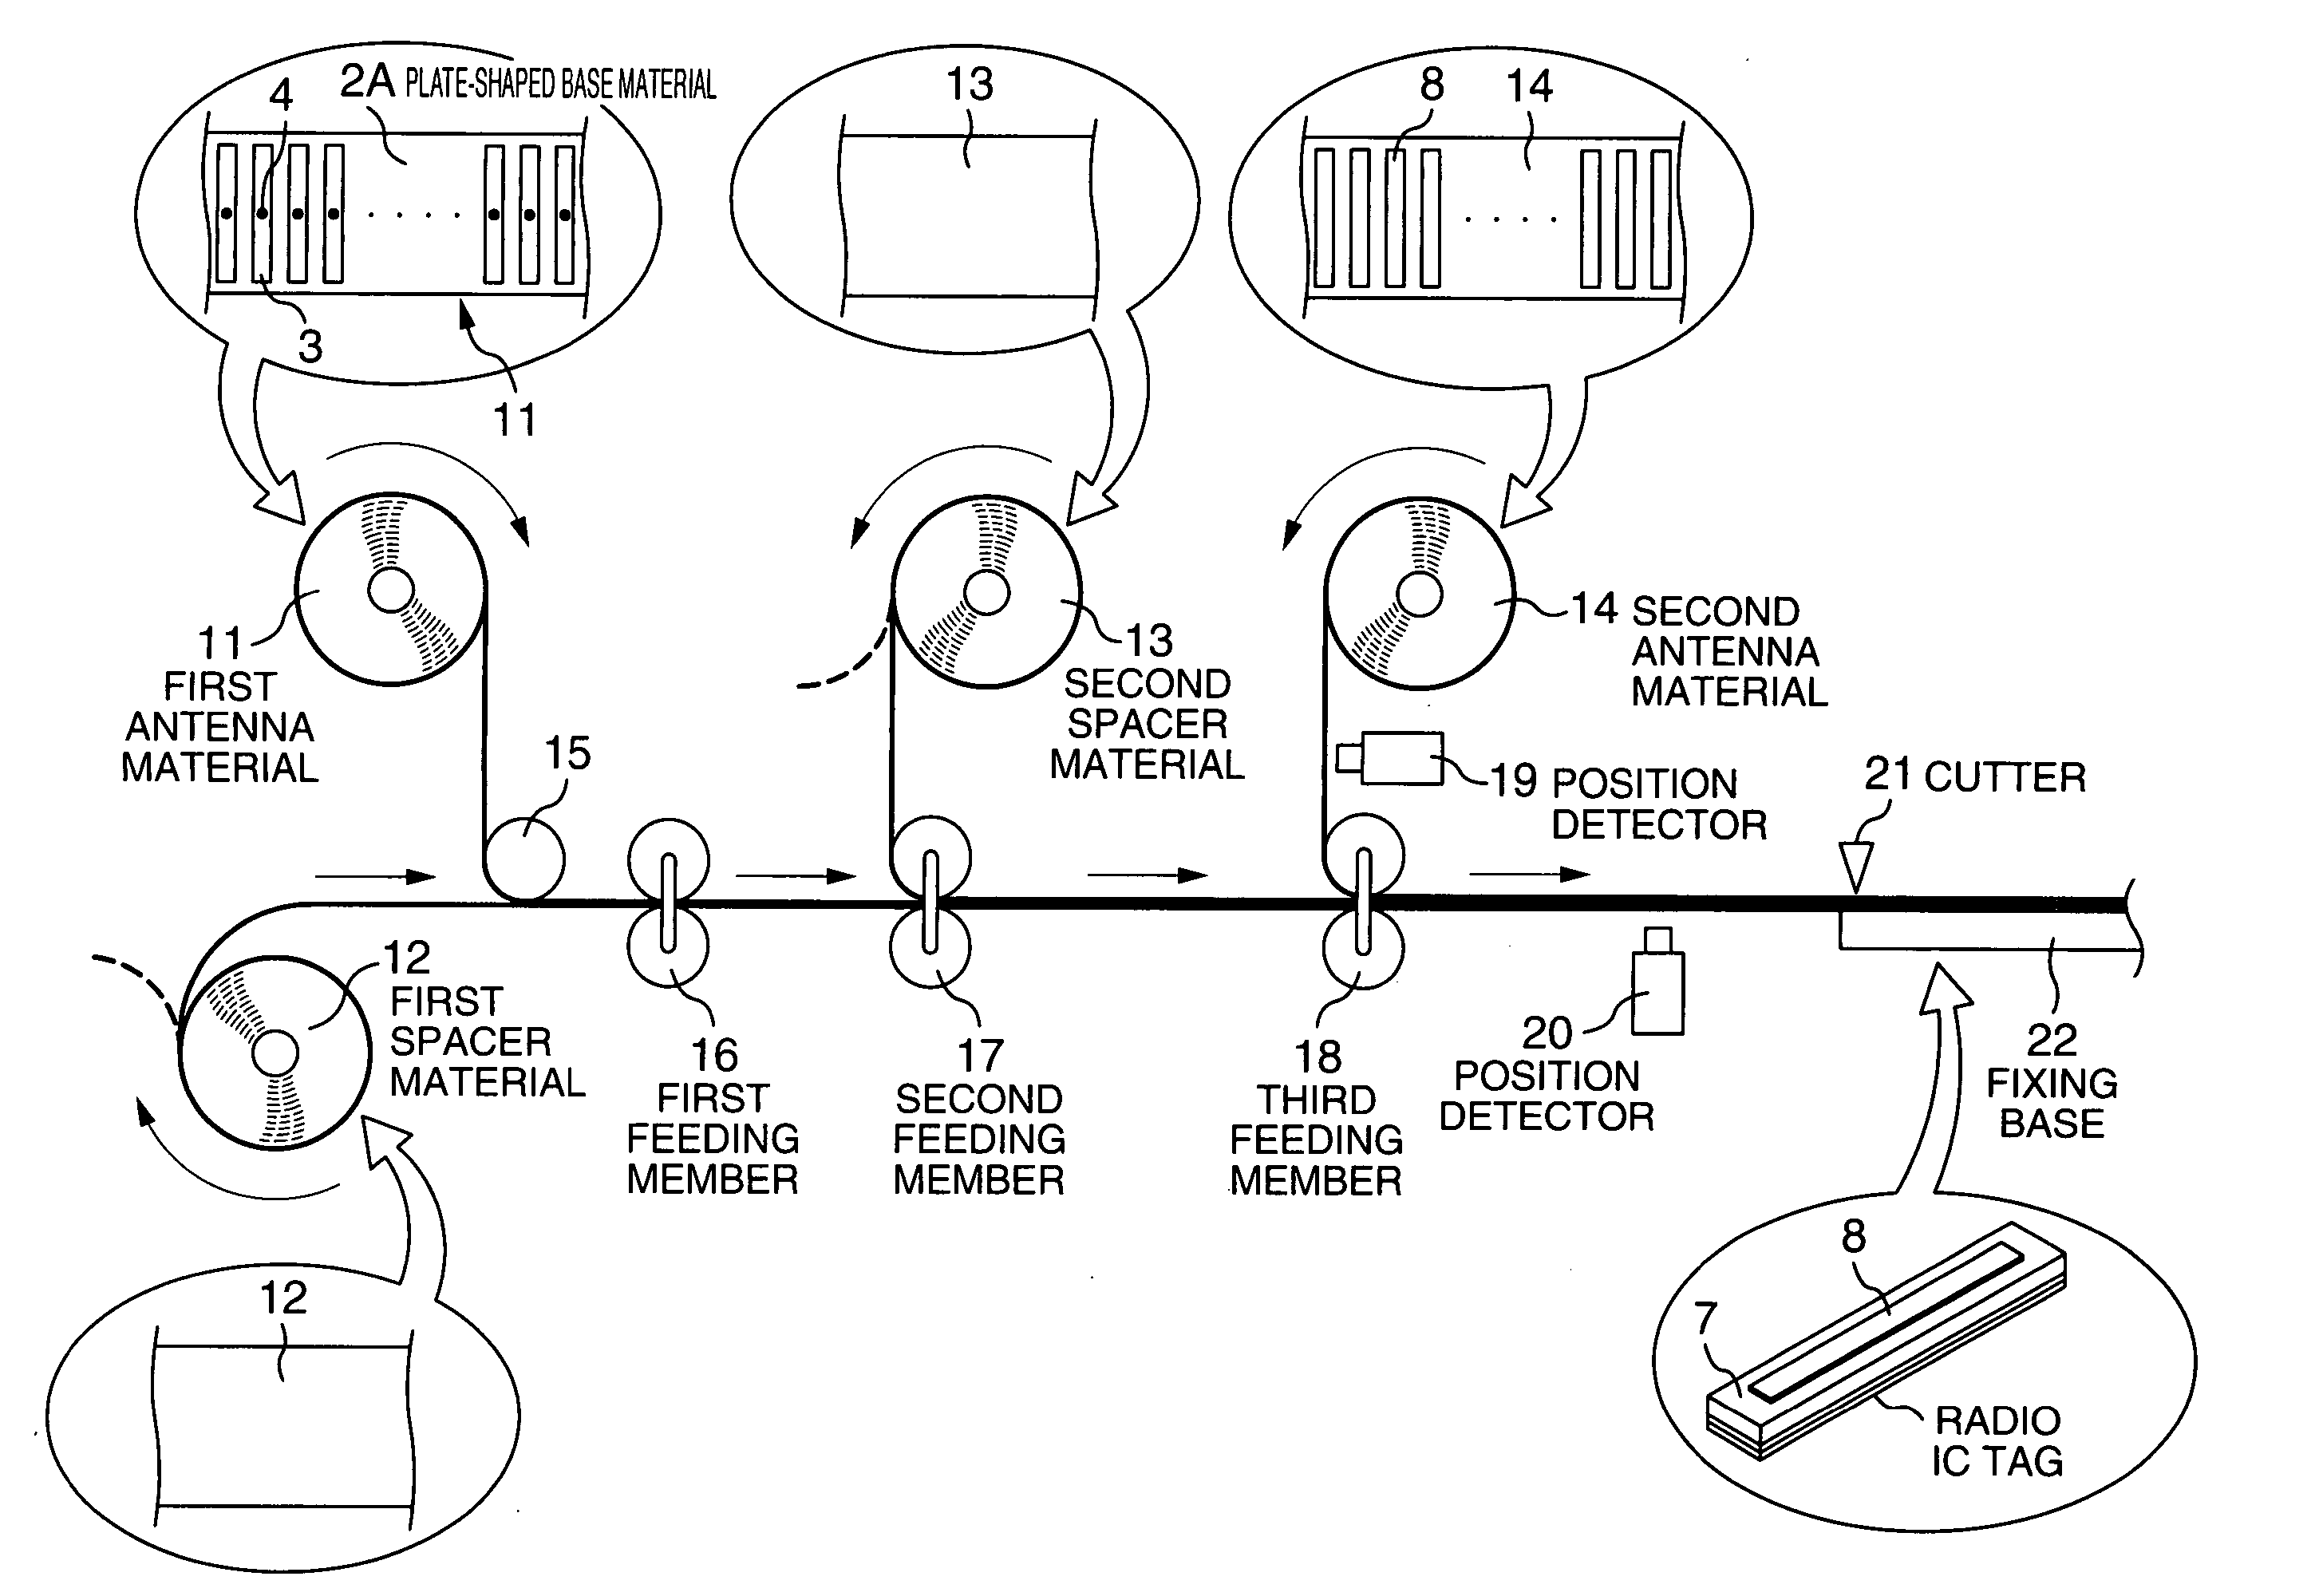 Radio IC tag, method for manufacturing radio IC tag, and apparatus for manufacturing radio IC tag